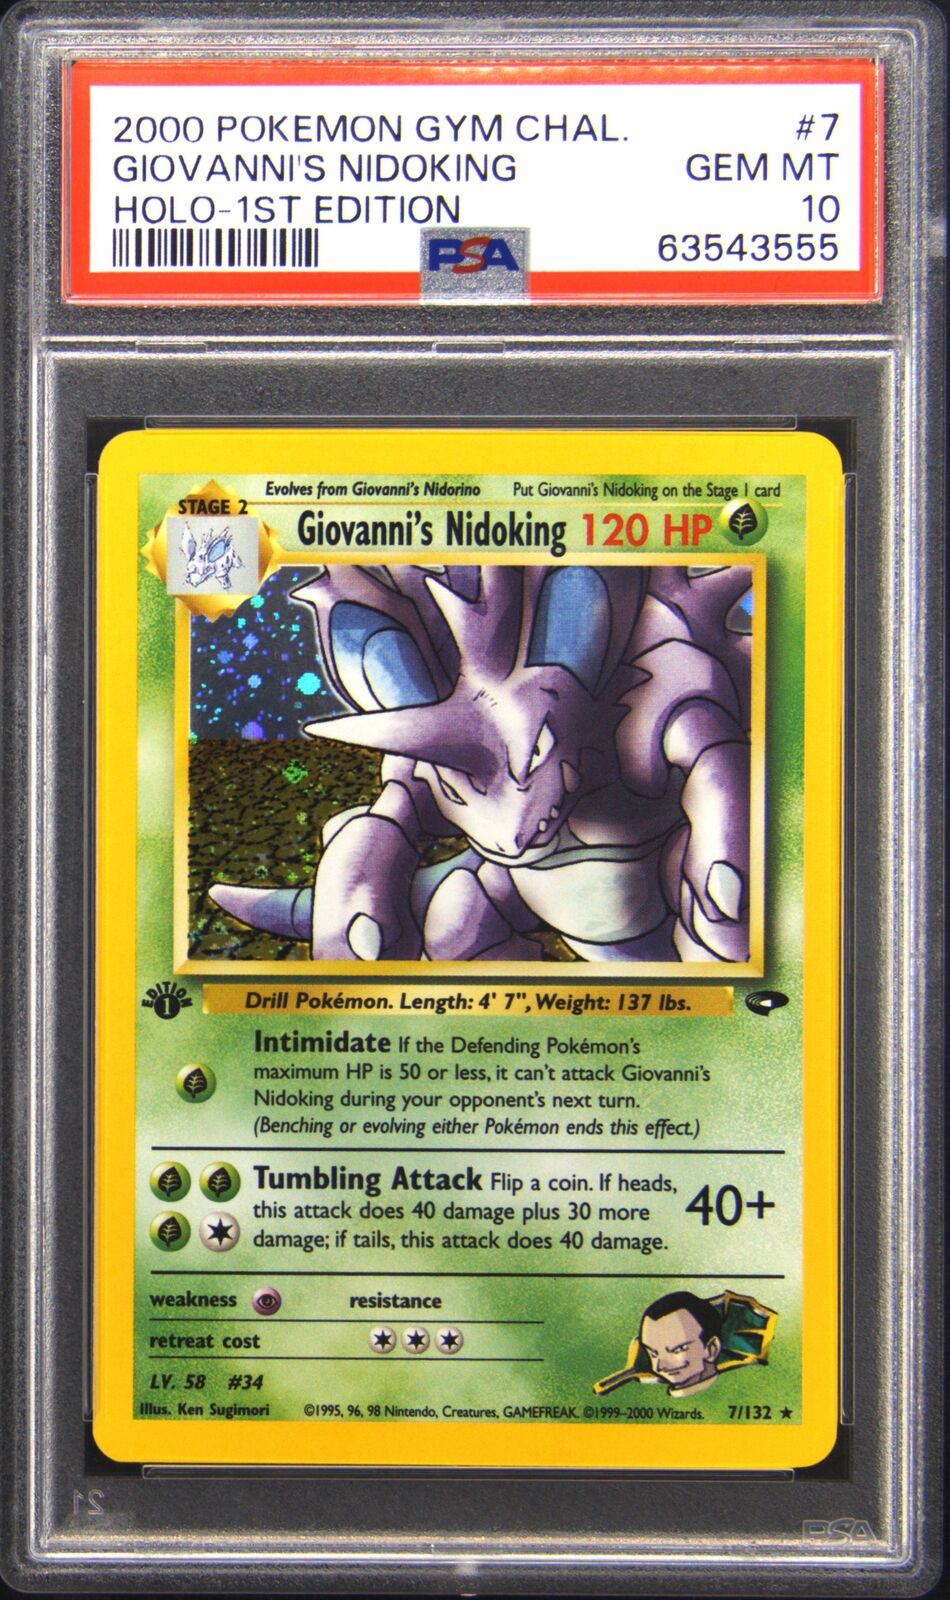 2000 7 Giovanni's Nidoking 1st Edition Holo Rare Pokemon TCG Card PSA 10